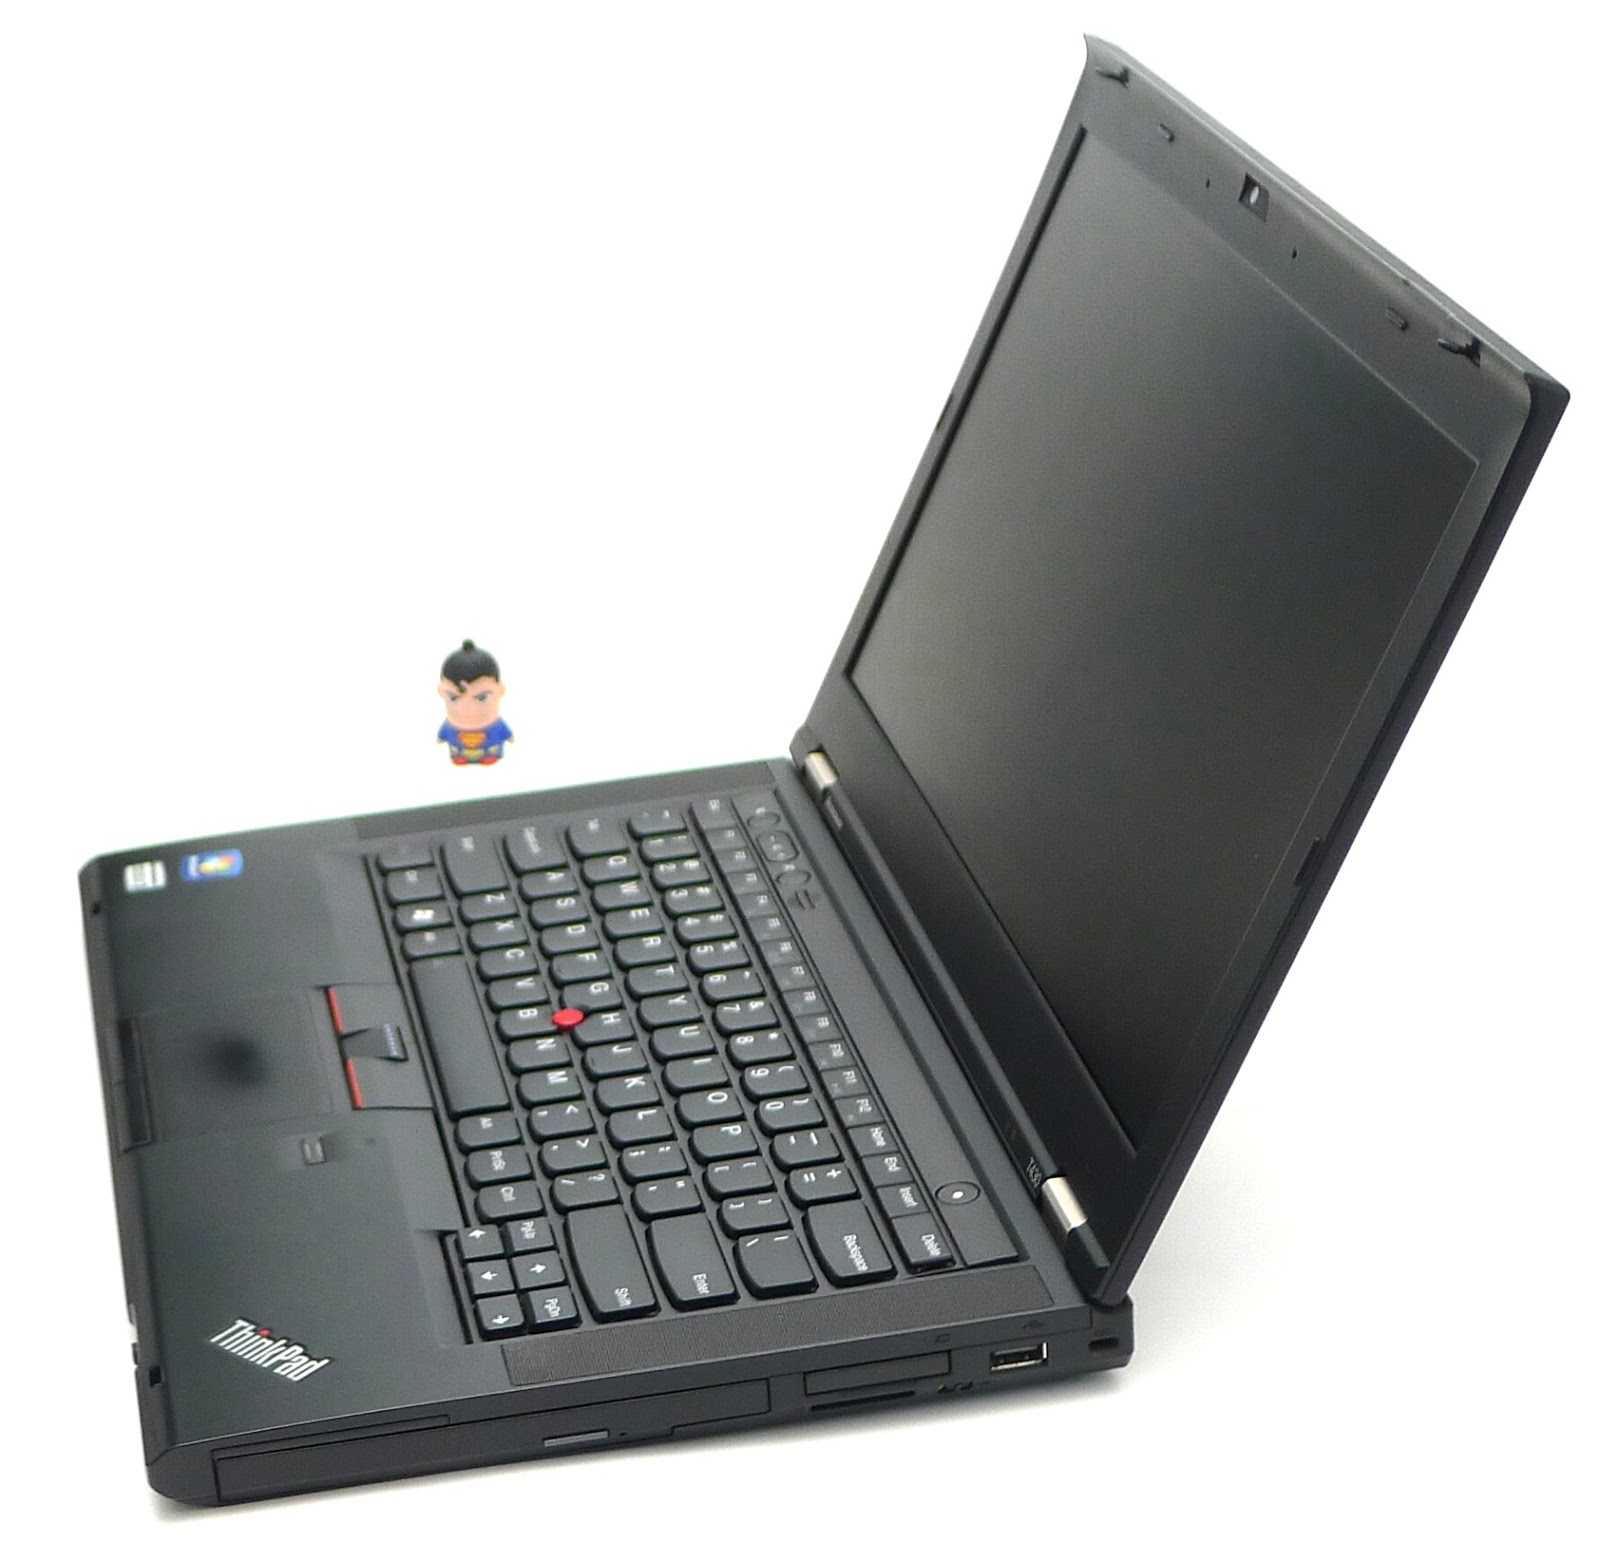 Ноутбук lenovo thinkpad t570 (20h9s01v00) — купить, цена и характеристики, отзывы